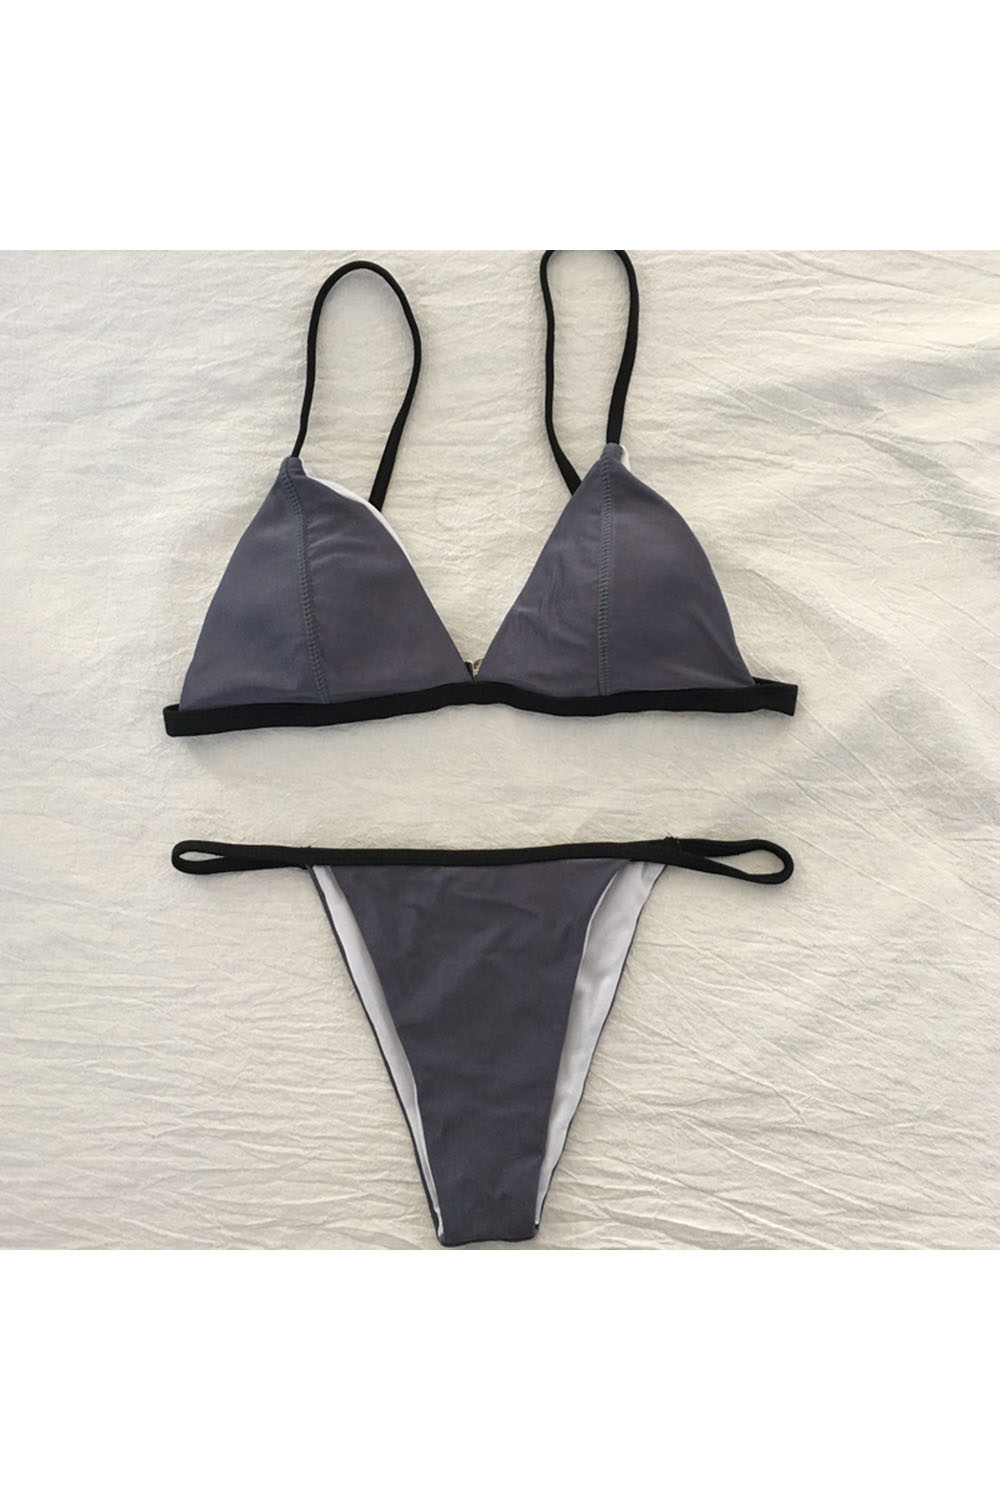 Sexy Triangle bikini set for beach vacation